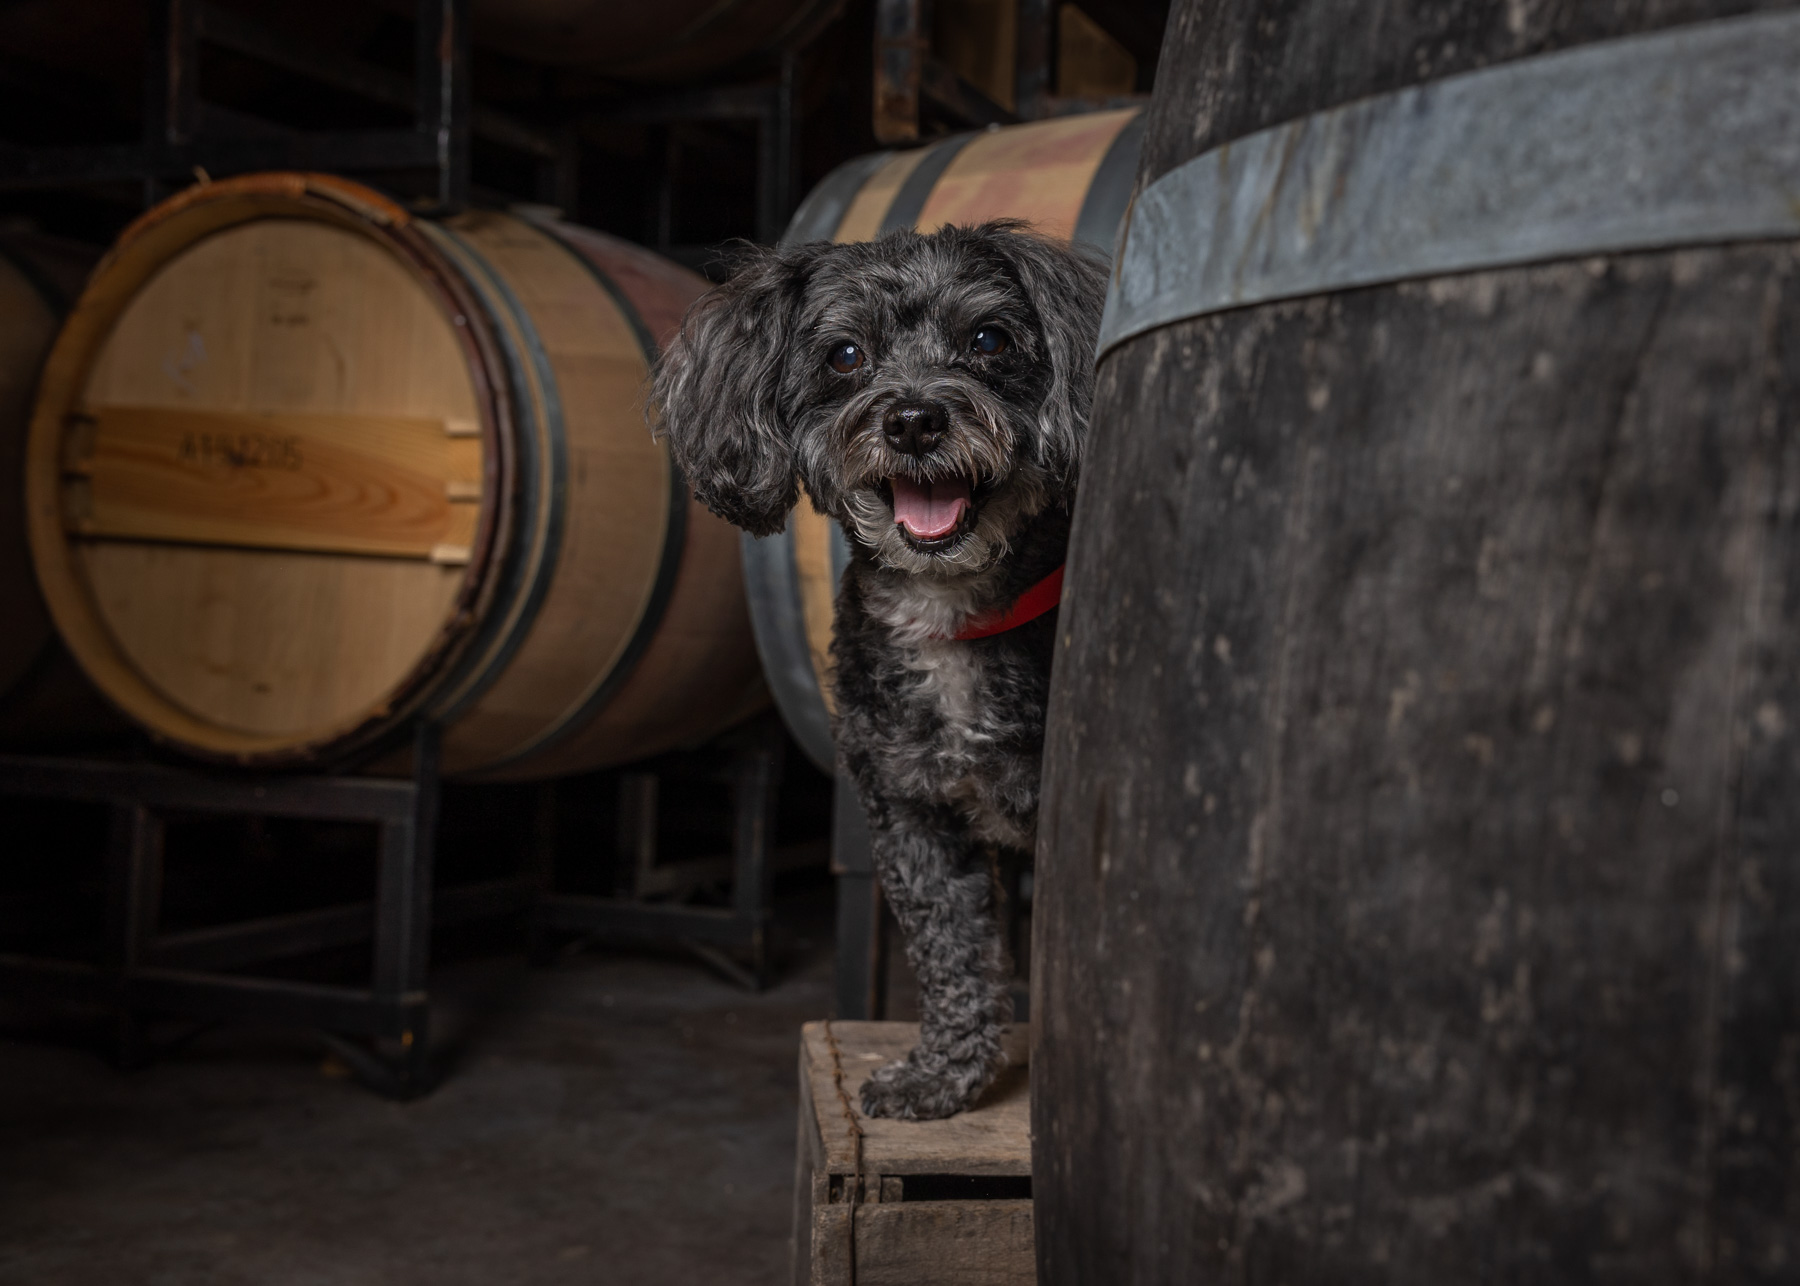 Happy cute dog standing on a wine barrel in a cellar